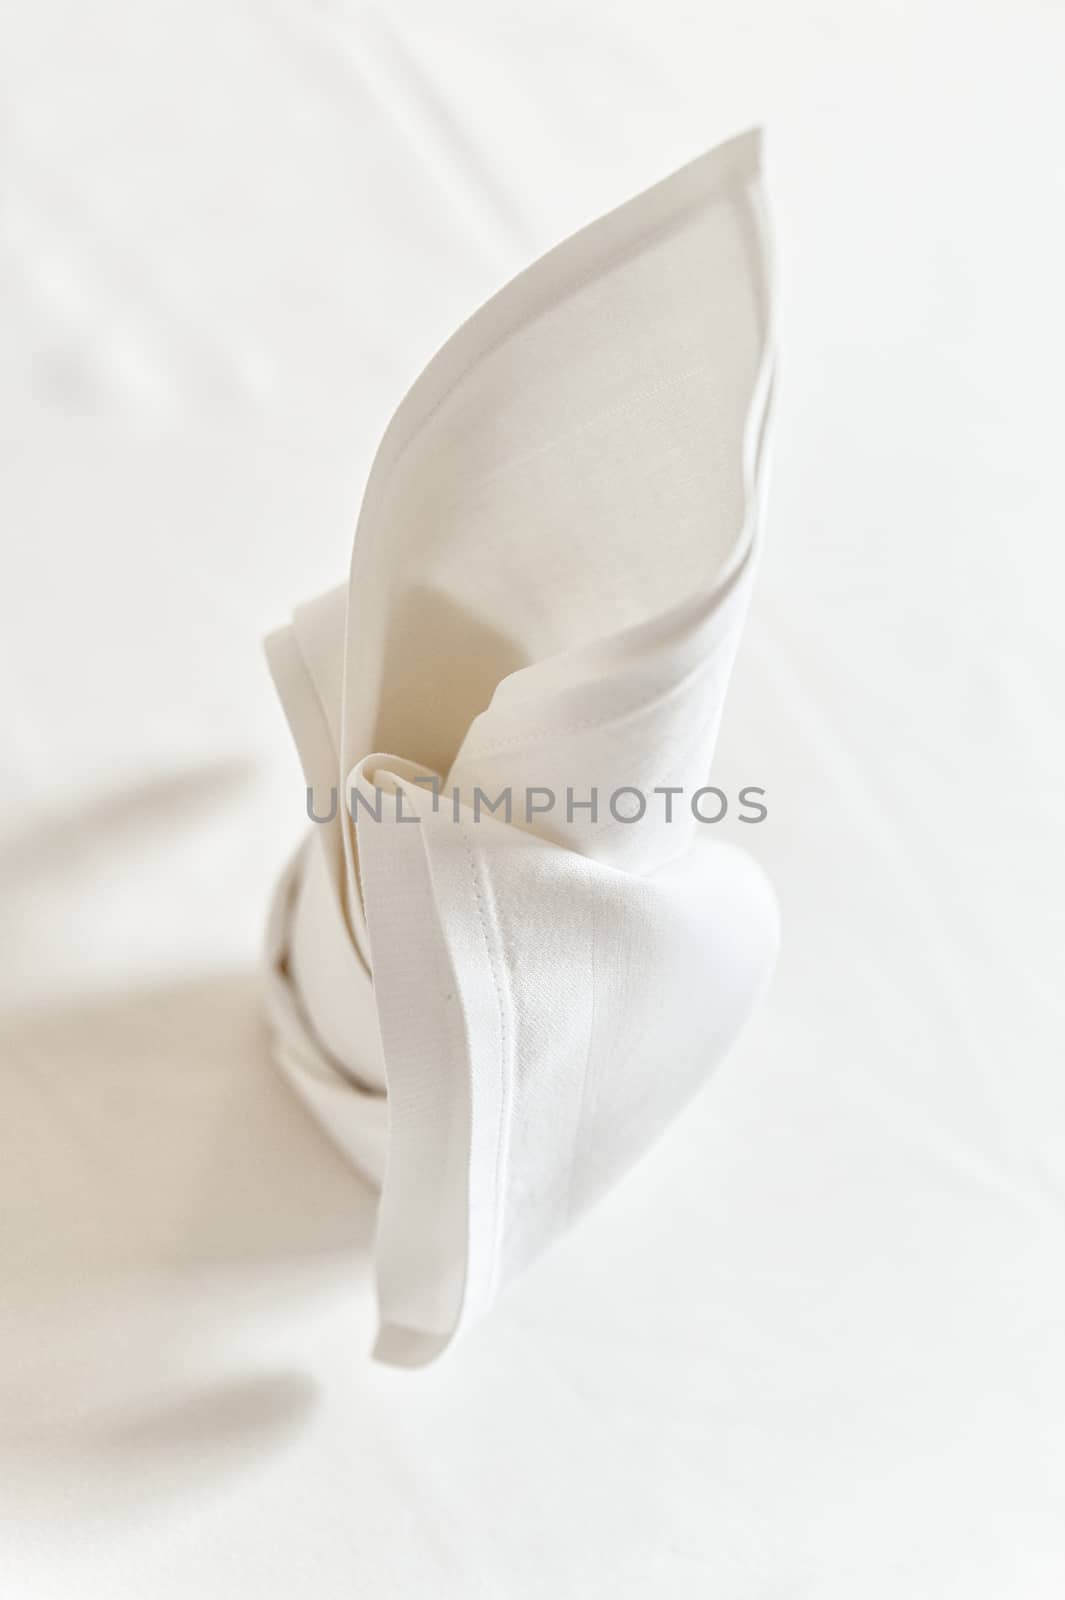 Detail view of a folded white napkin